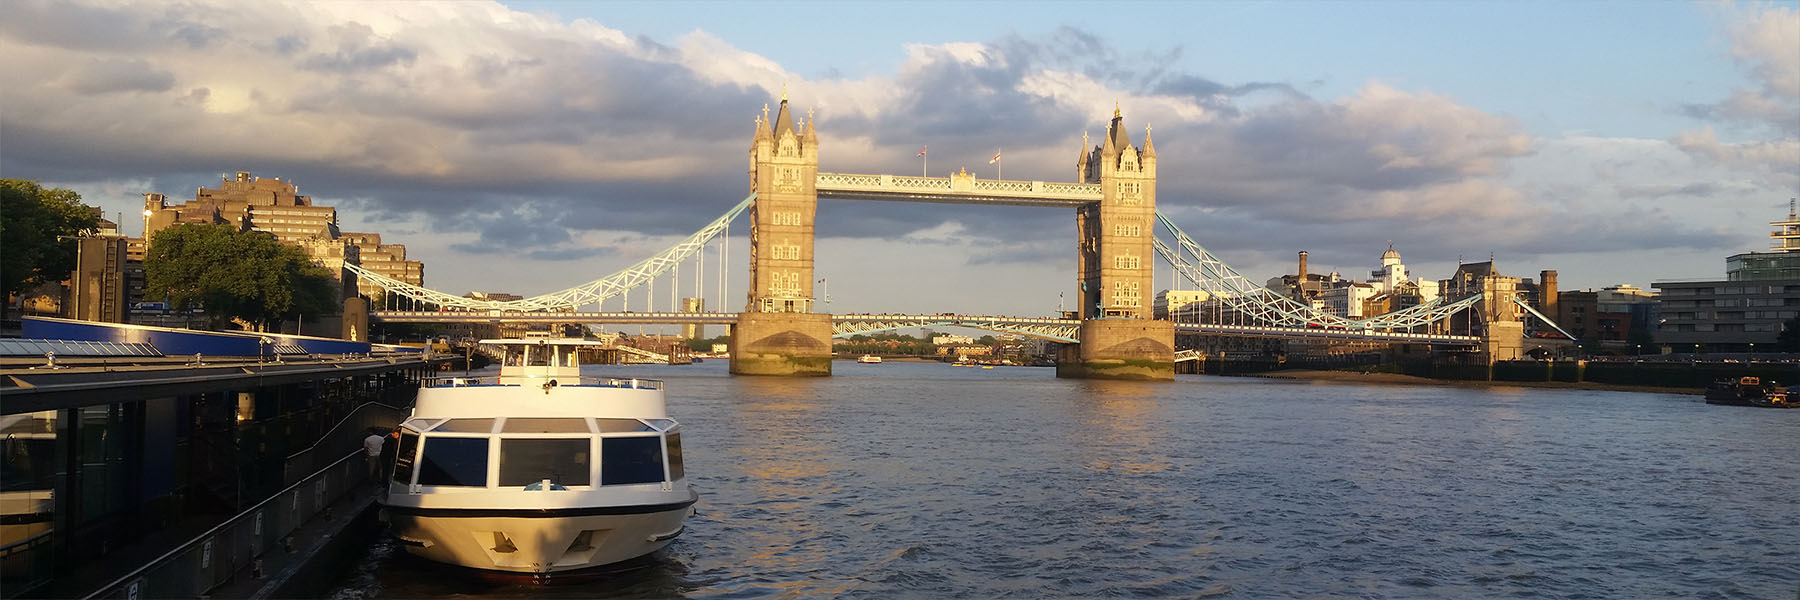 Landscape of the Tower Bridge in London.